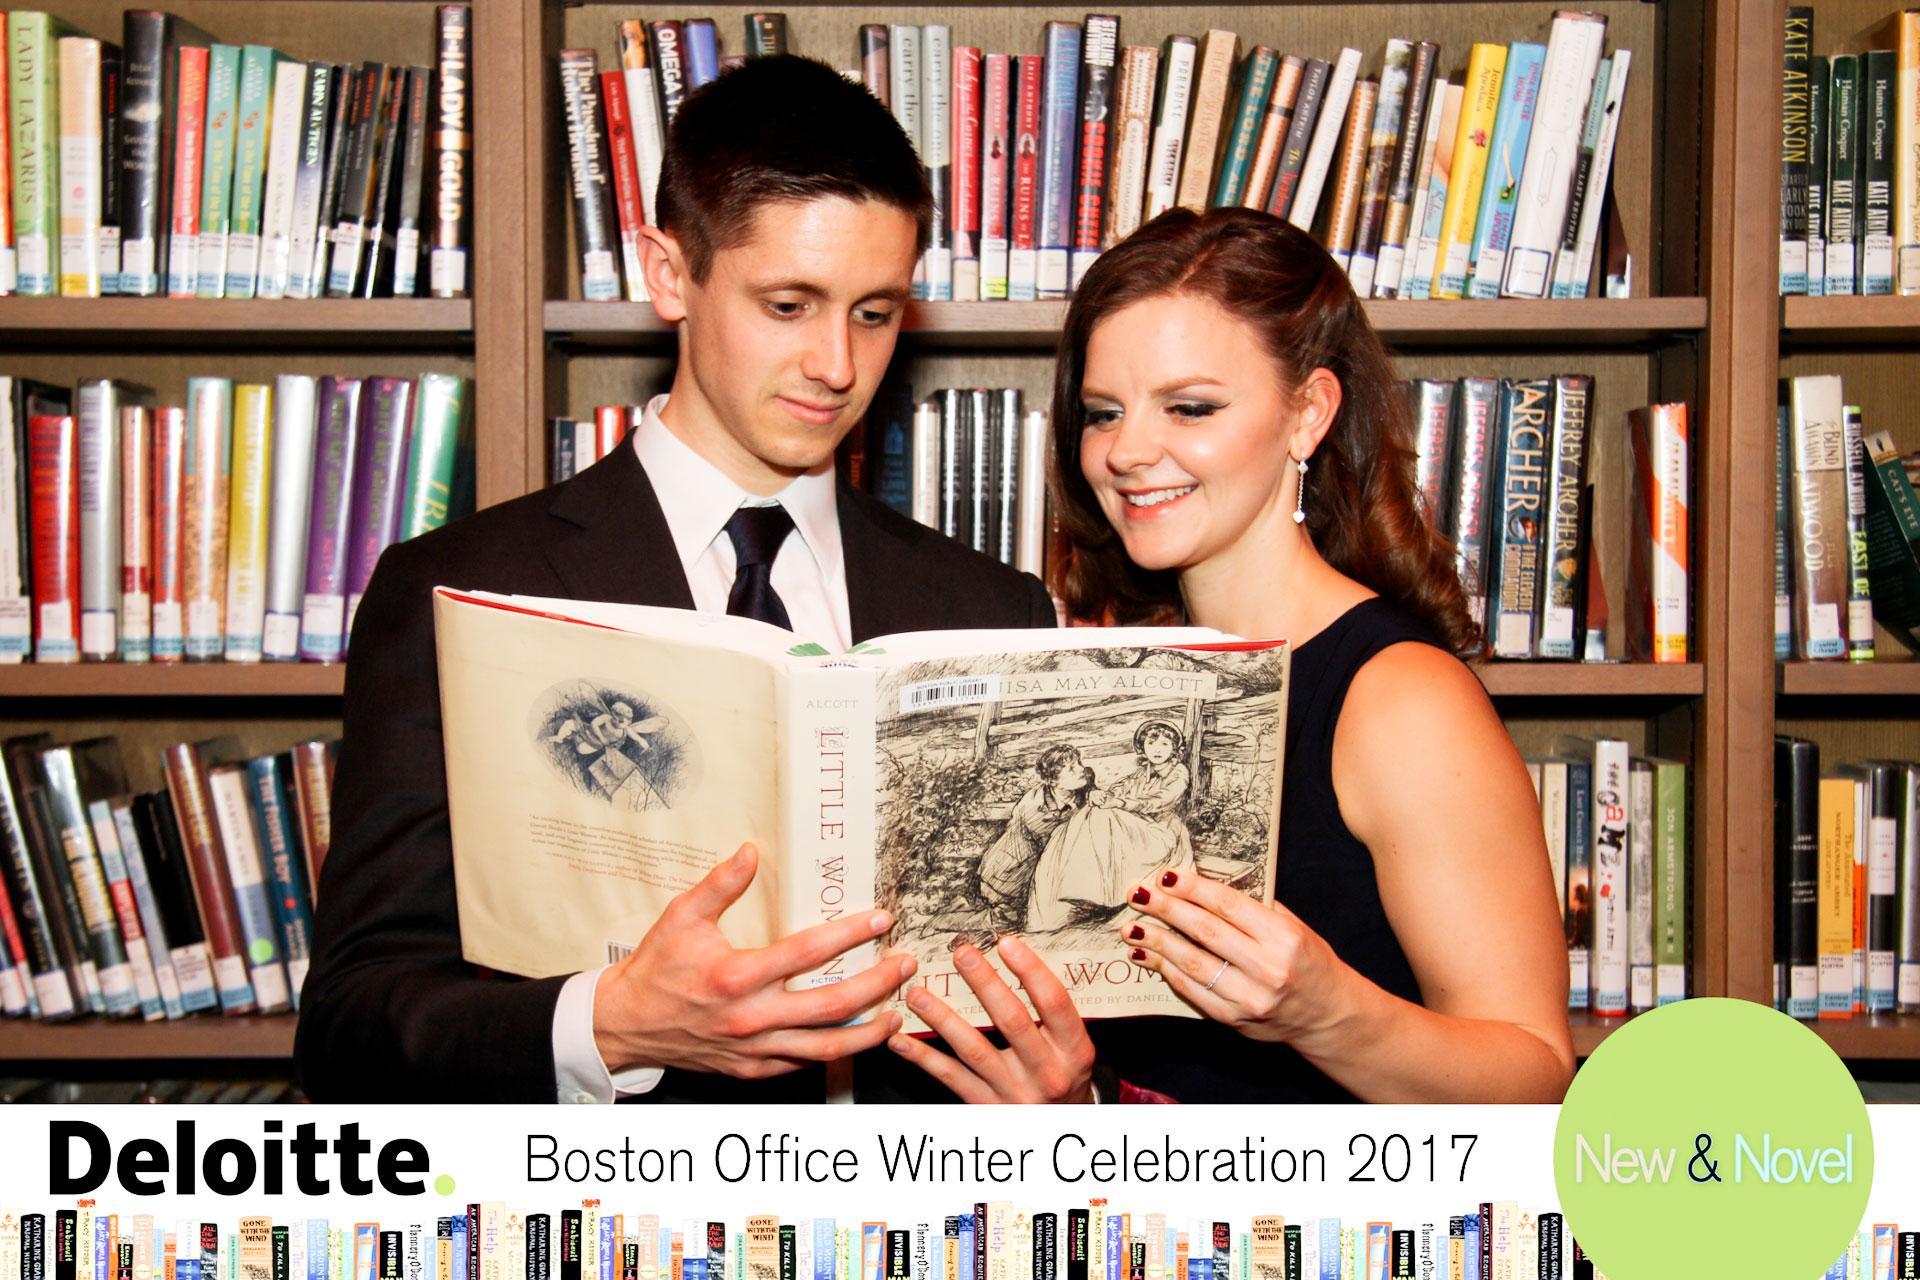 Deloitte Photo Station at Boston Public Library Couple 5x7 Print